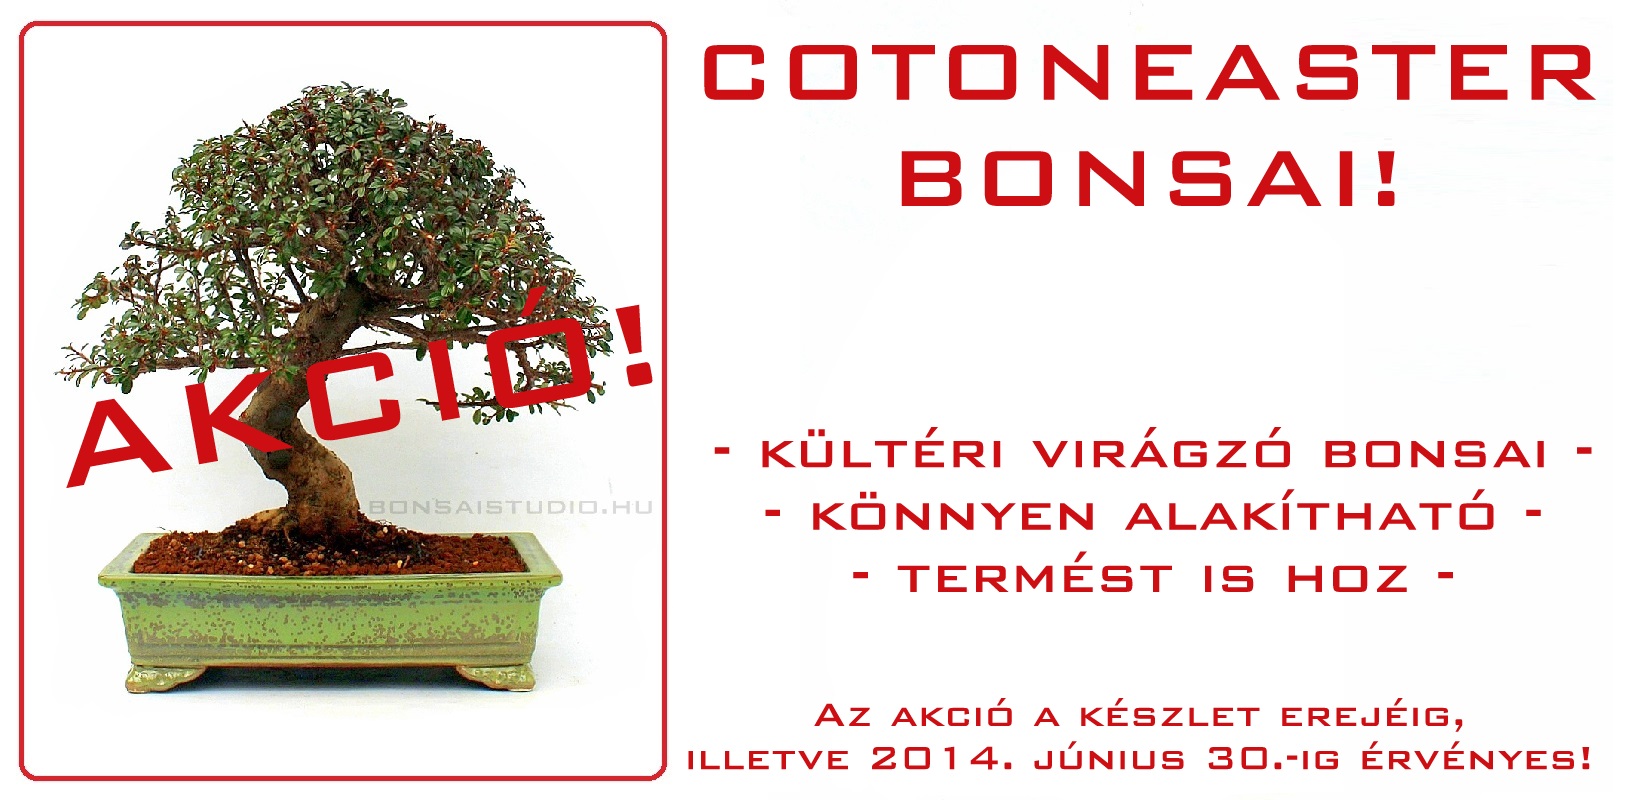 bonsai szoba bonsai es kulteri bonsaj alapanyag es kesz noveny vasarlas rendeles erd marczika bonsai studio hungary bonsai webshop webaruhaz